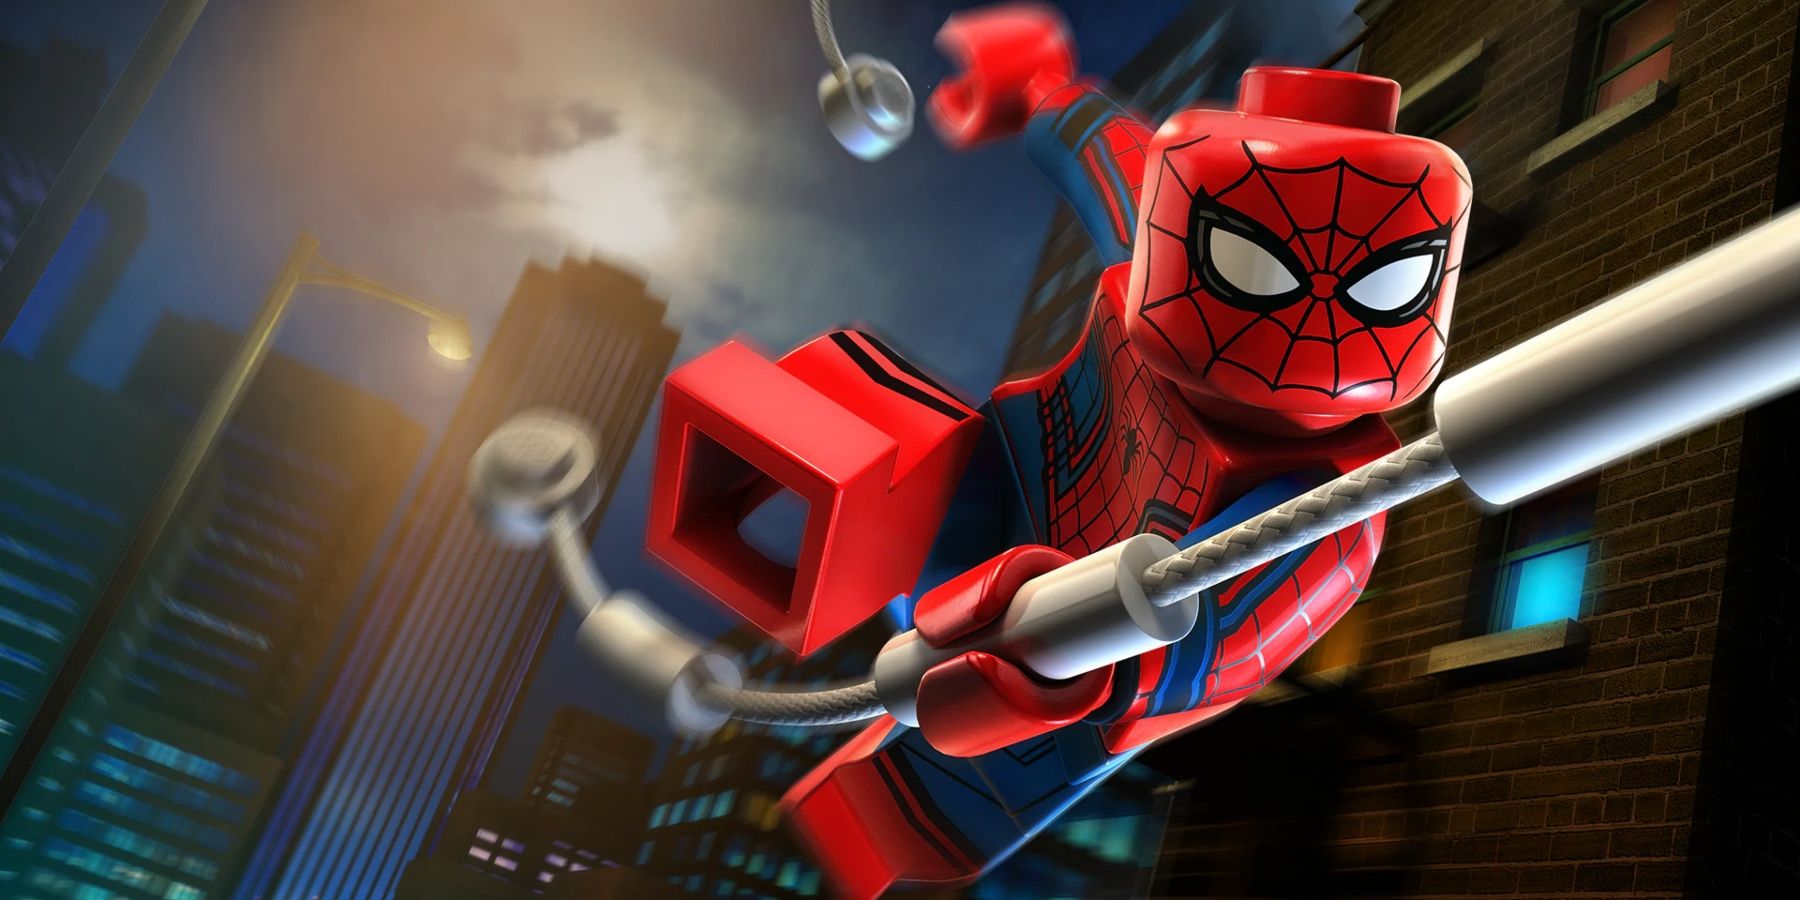 LEGO Avengers Spider-Man